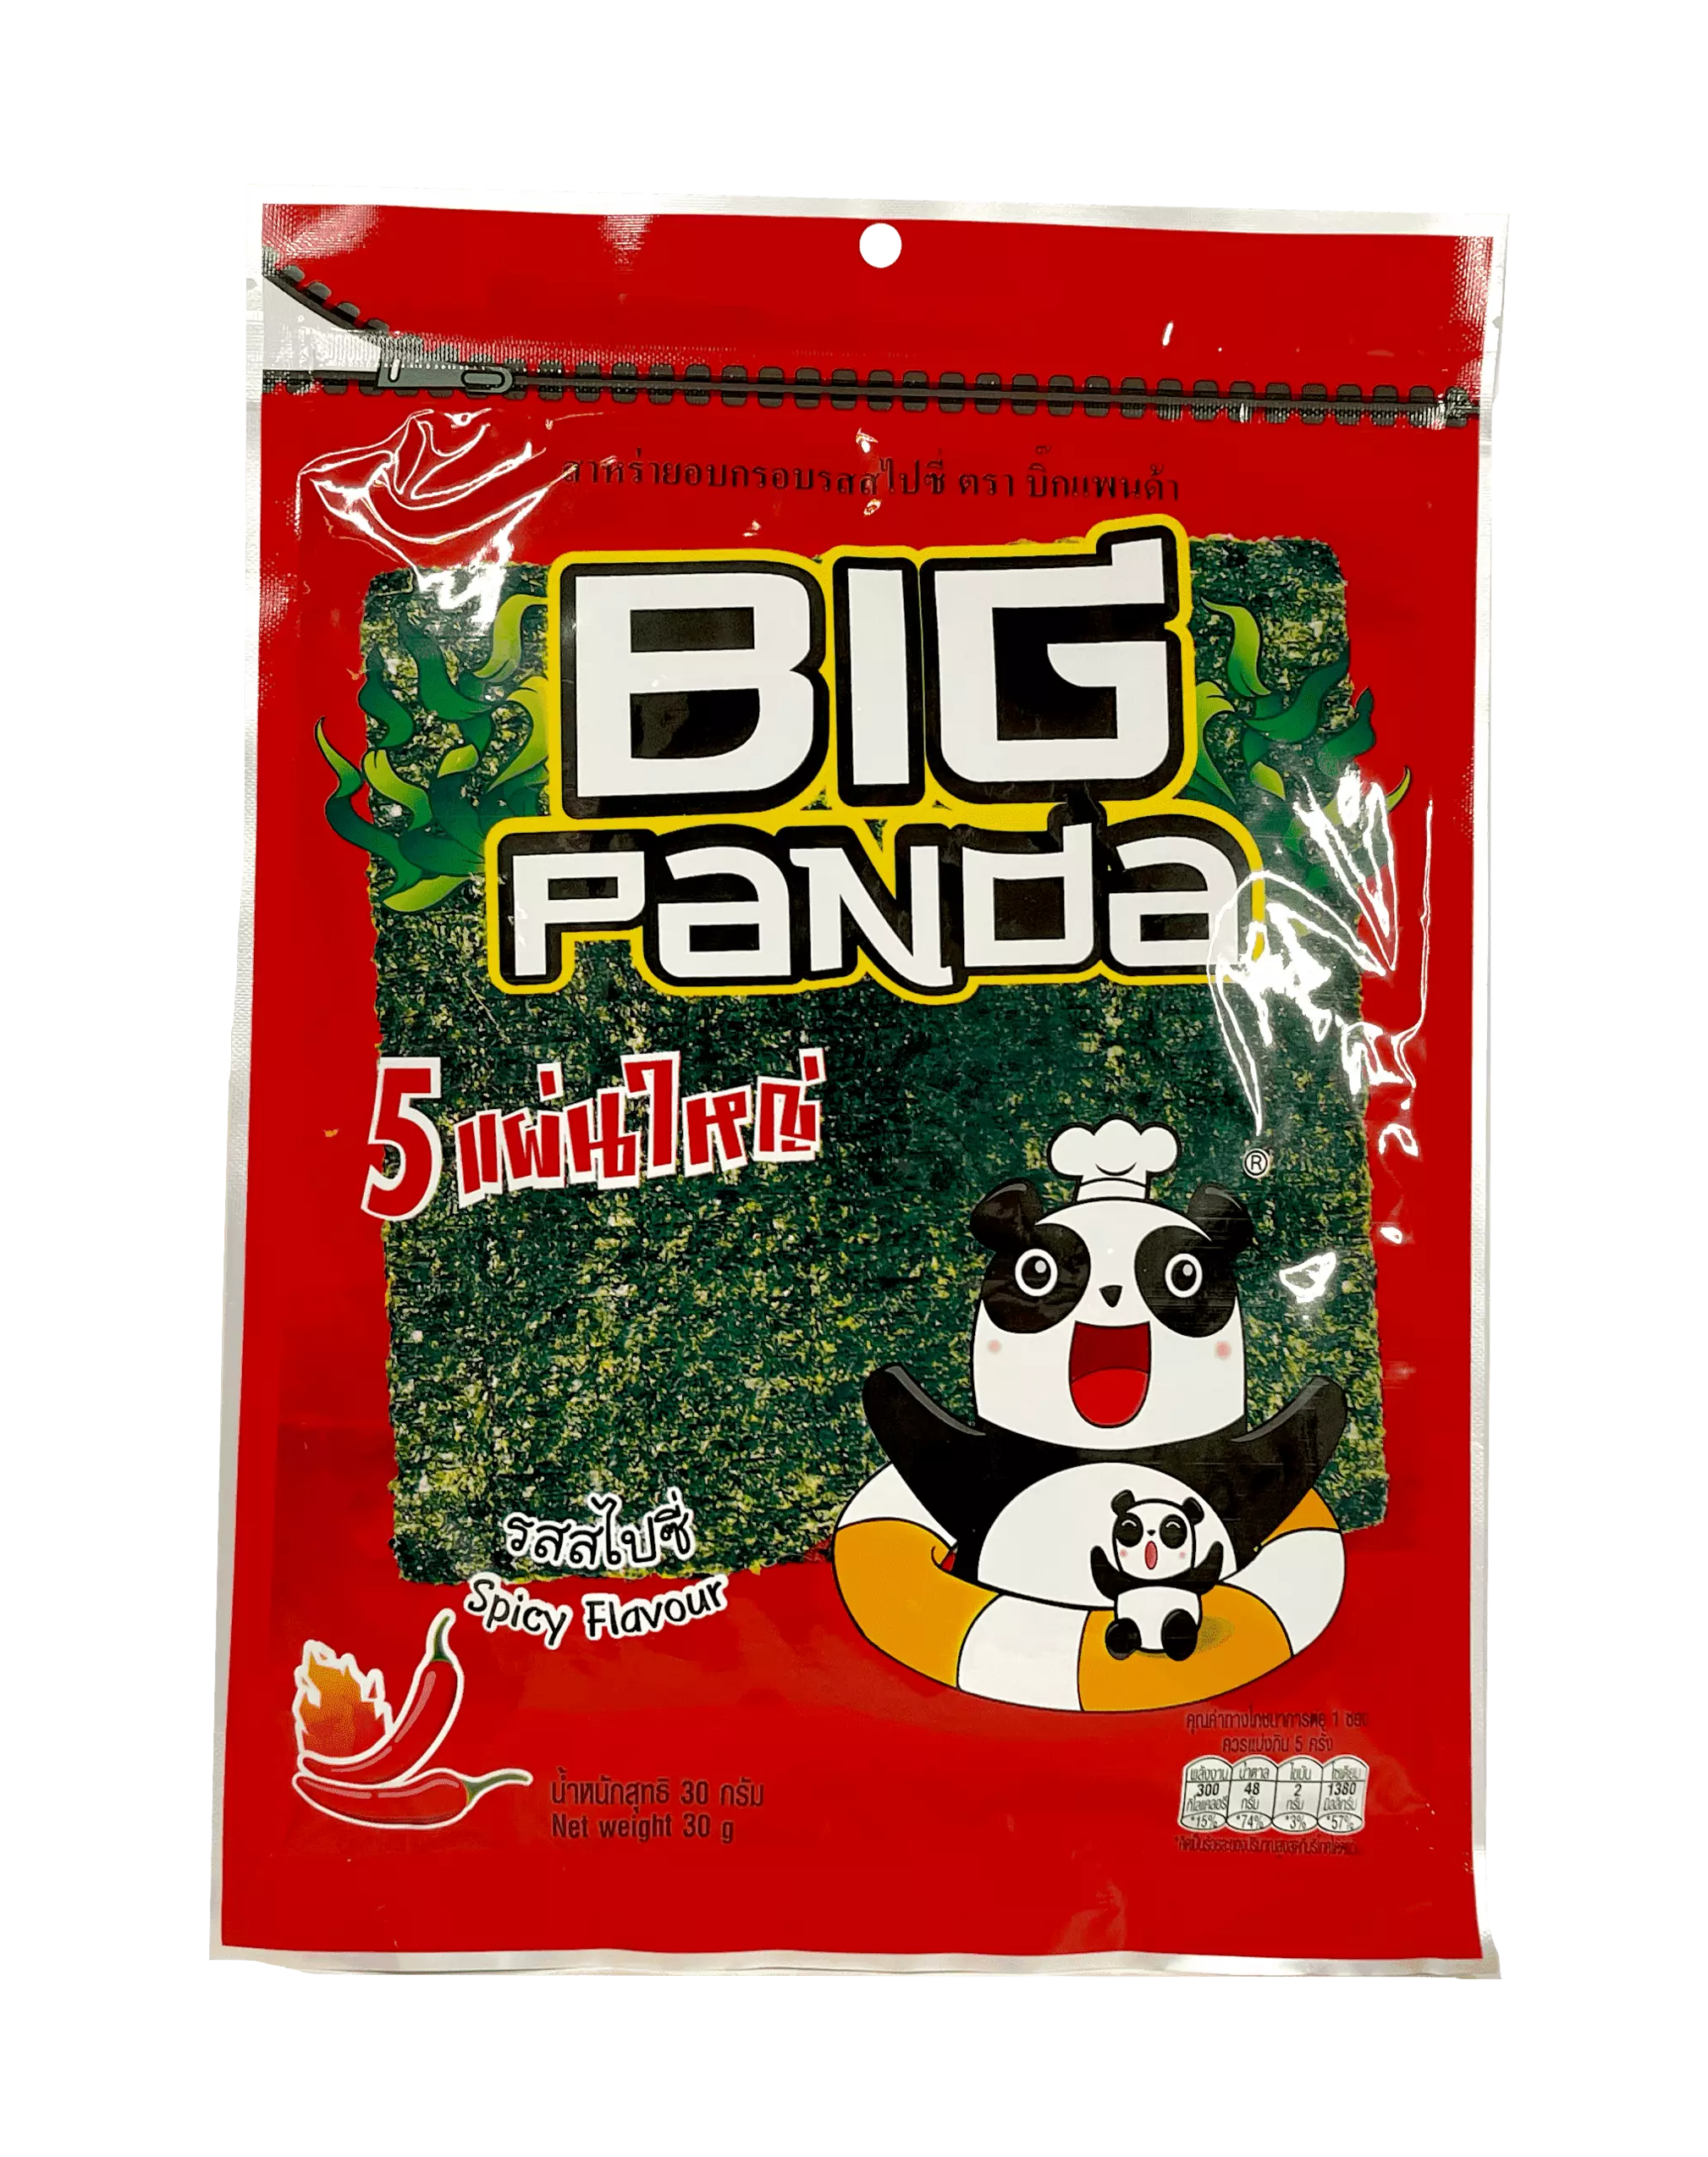 Crispy Seaweed Spicy Flavour 30g Big Panda Thailand